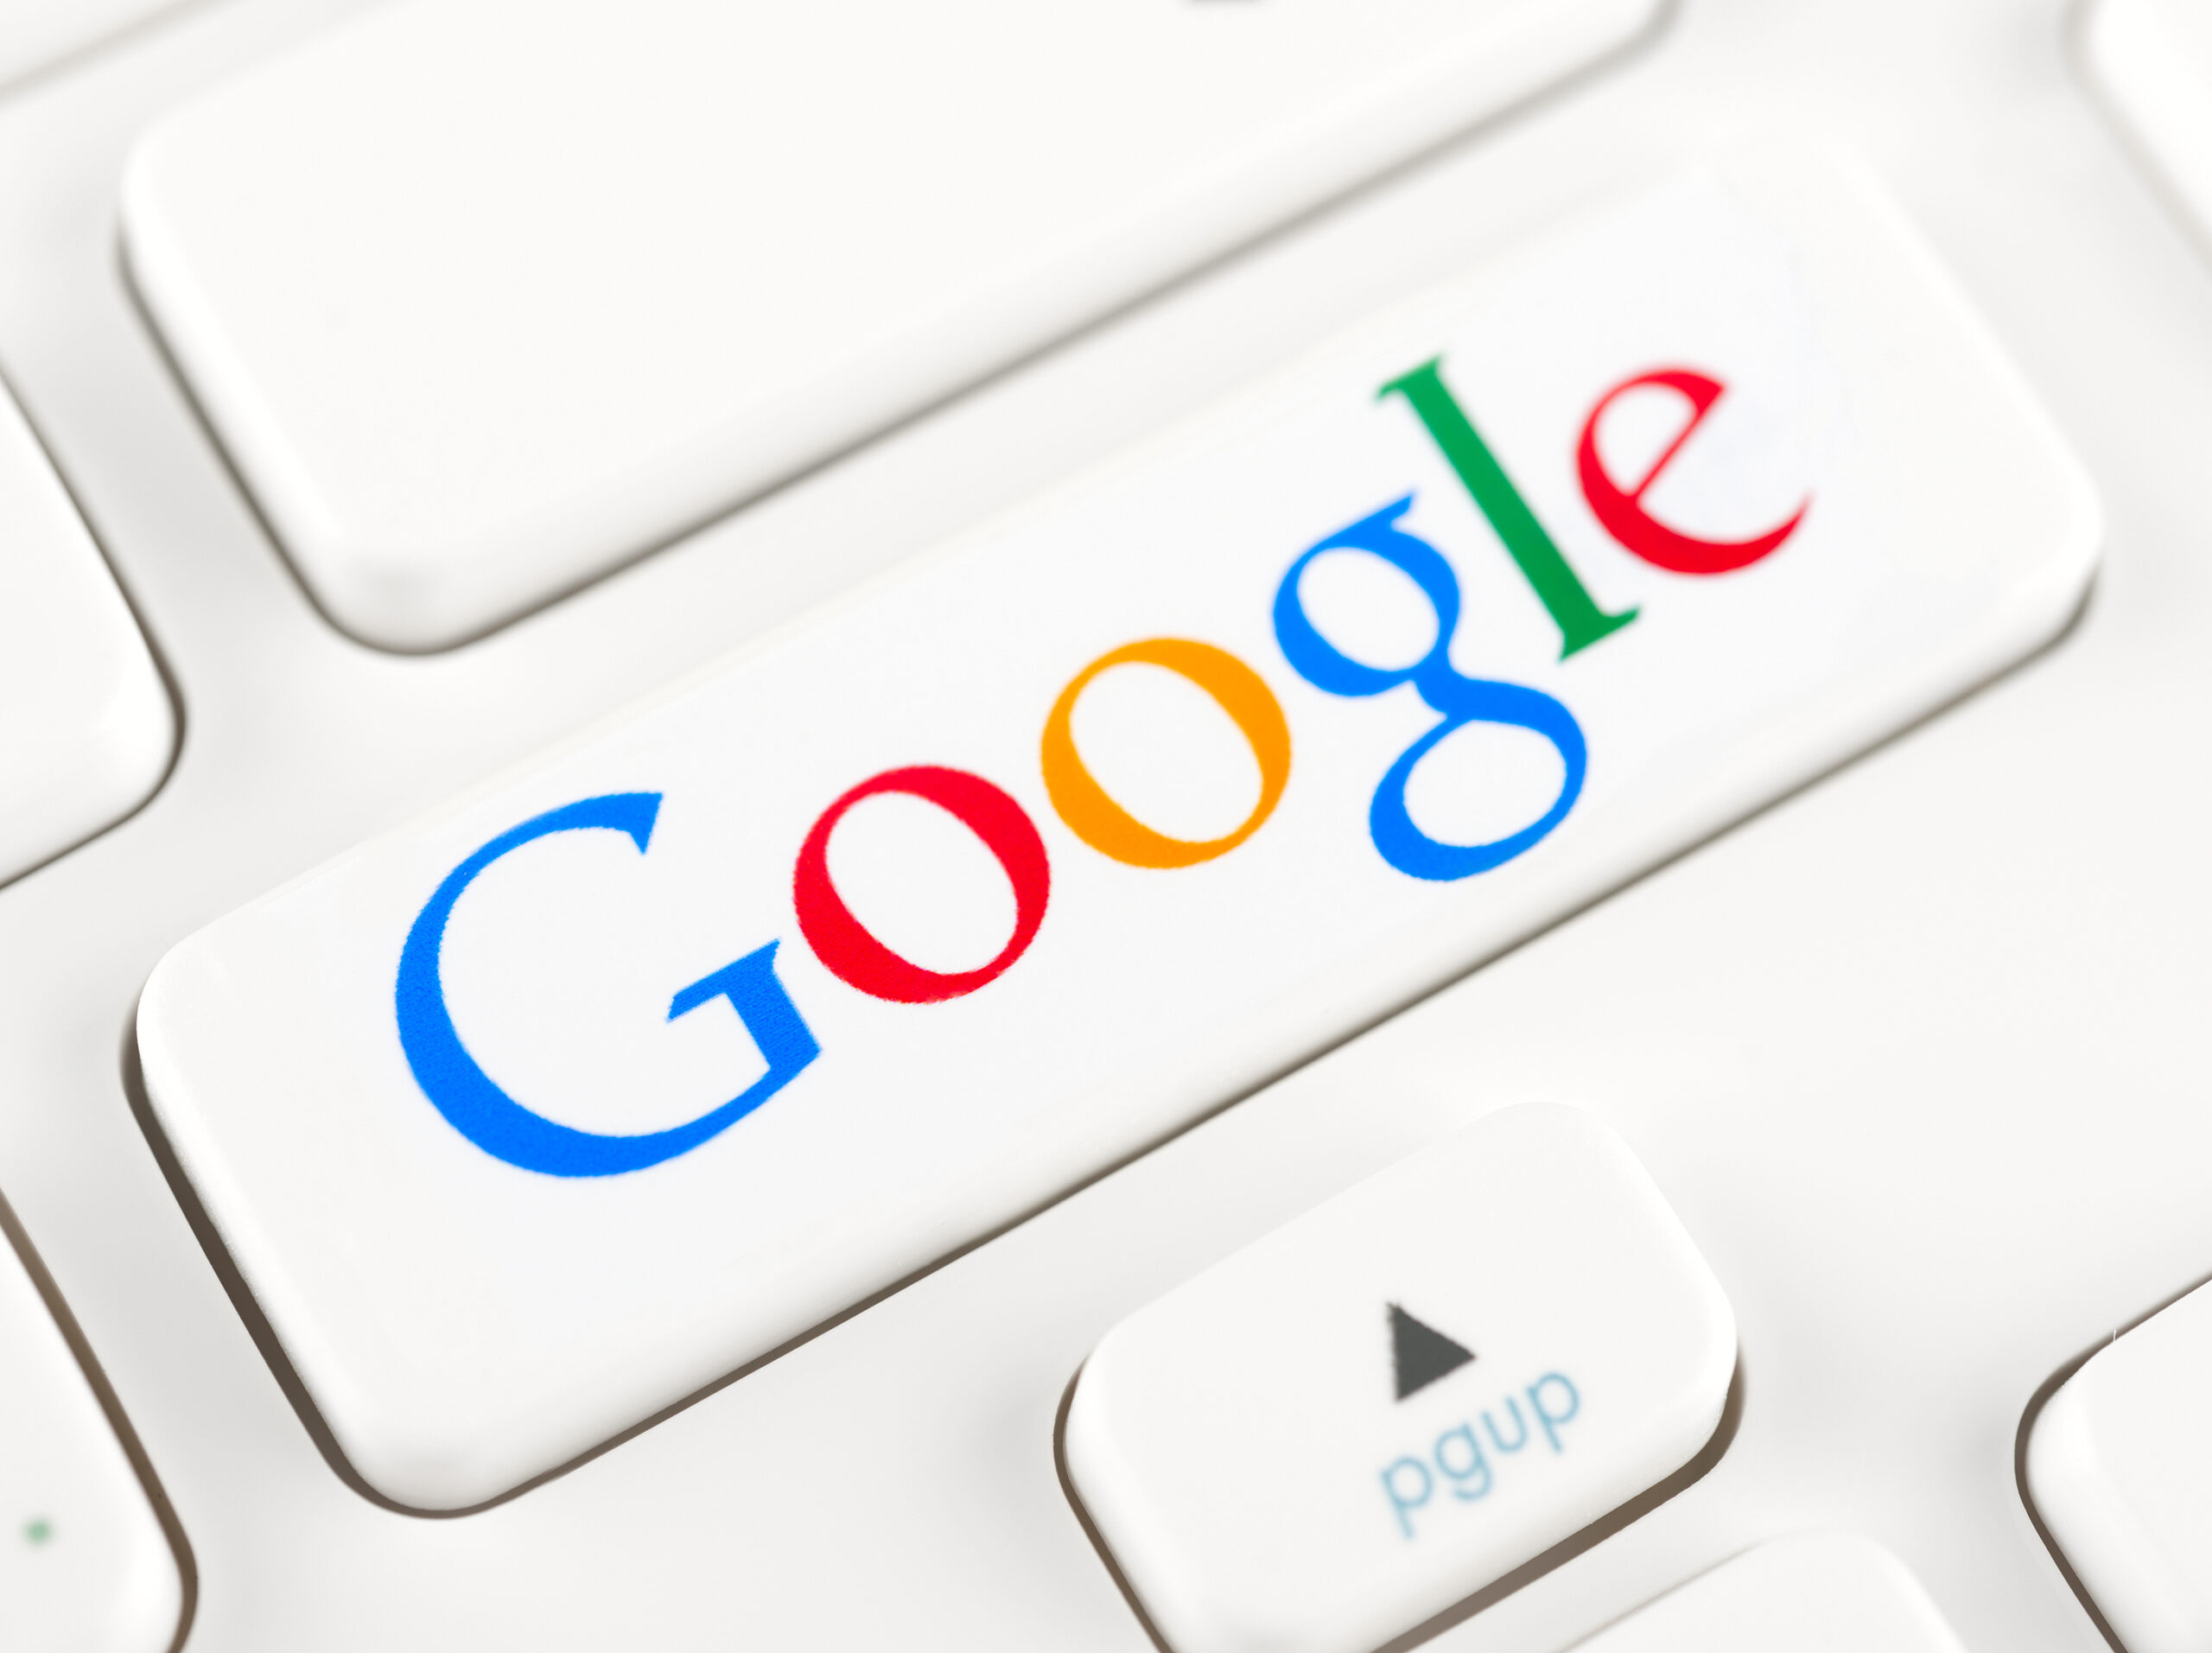 Google Logotype On A Keyboard Button